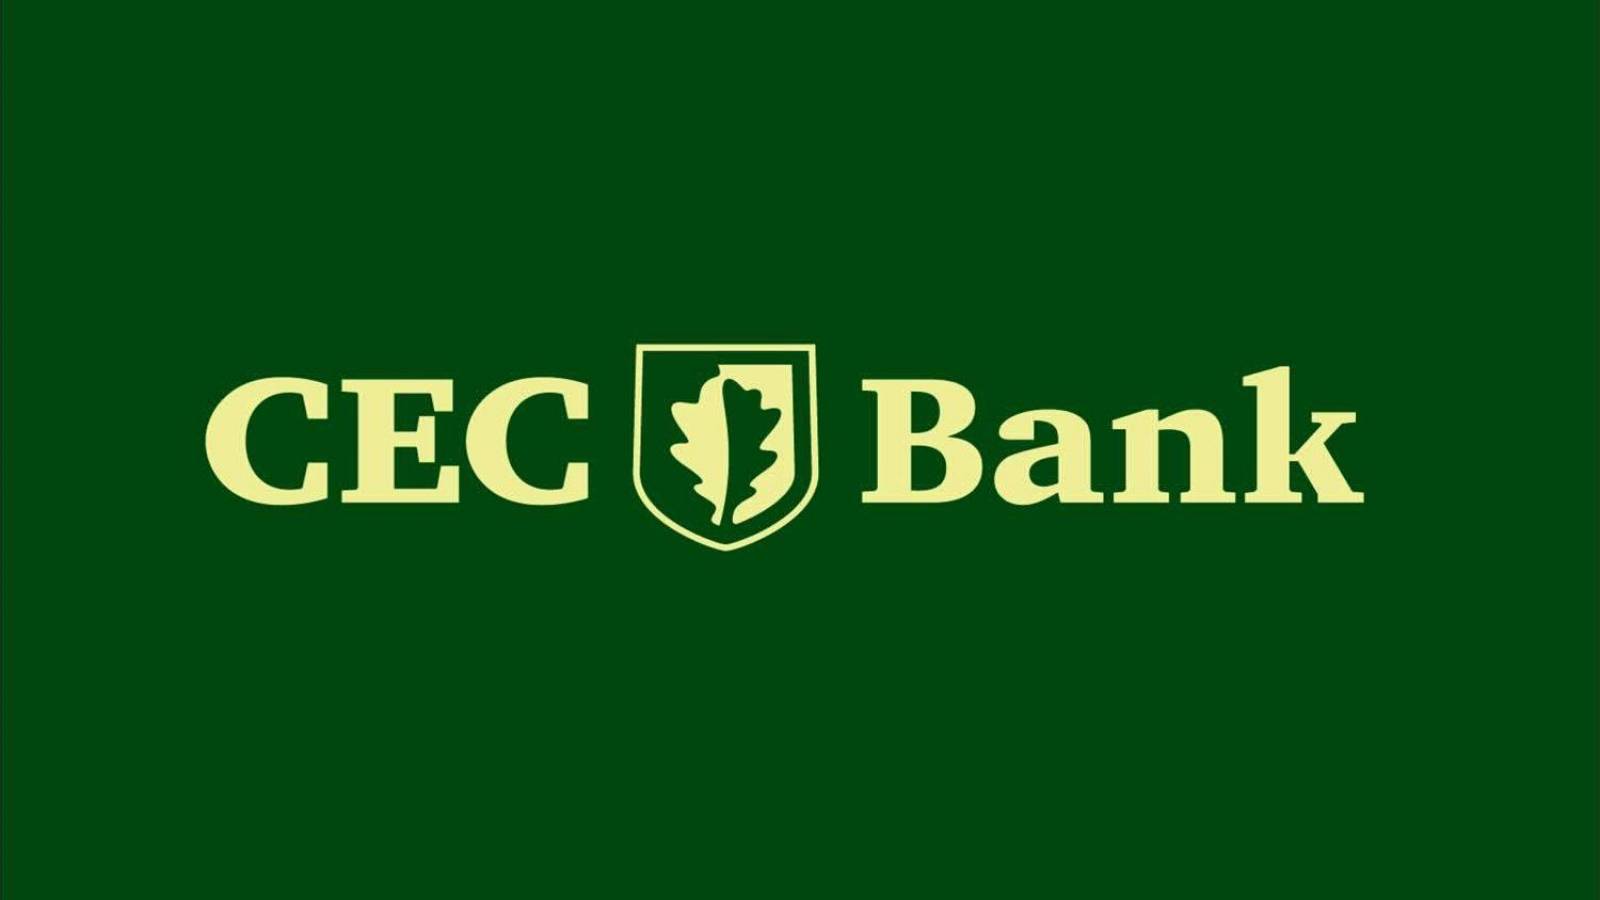 CEC Bank Decizia IMPORTANTA Anuntata Clientilor Masuri Puse Practica